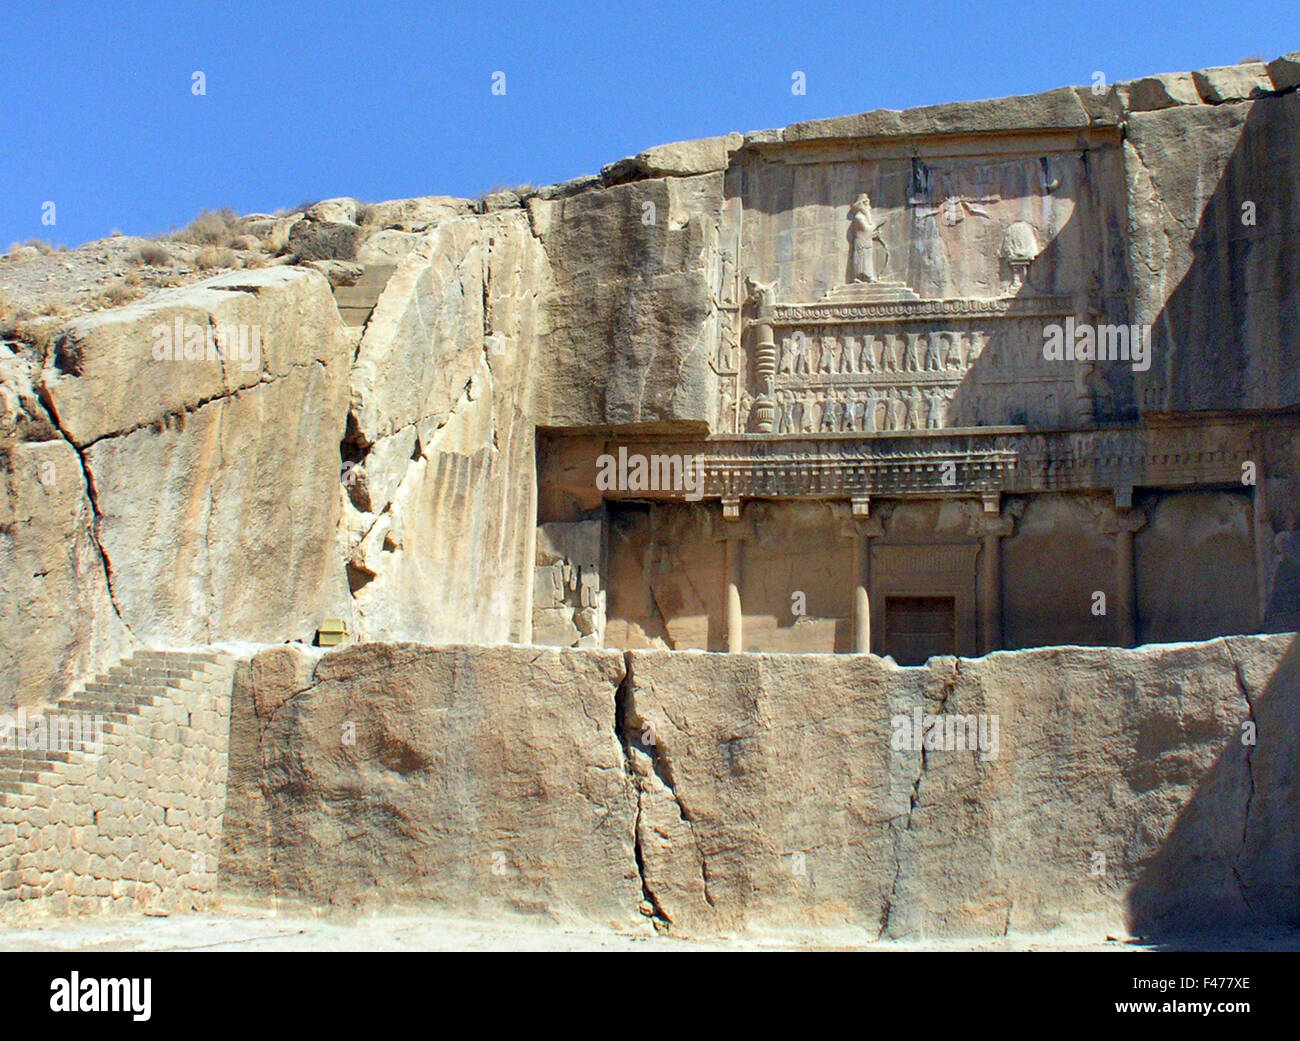 5824. Tumba de Xerxes III. En Persépolis. Xerxes (Artajerjes o Darío -nacido 425 - 338 BC), rey de Persia y el undécimo empe Foto de stock